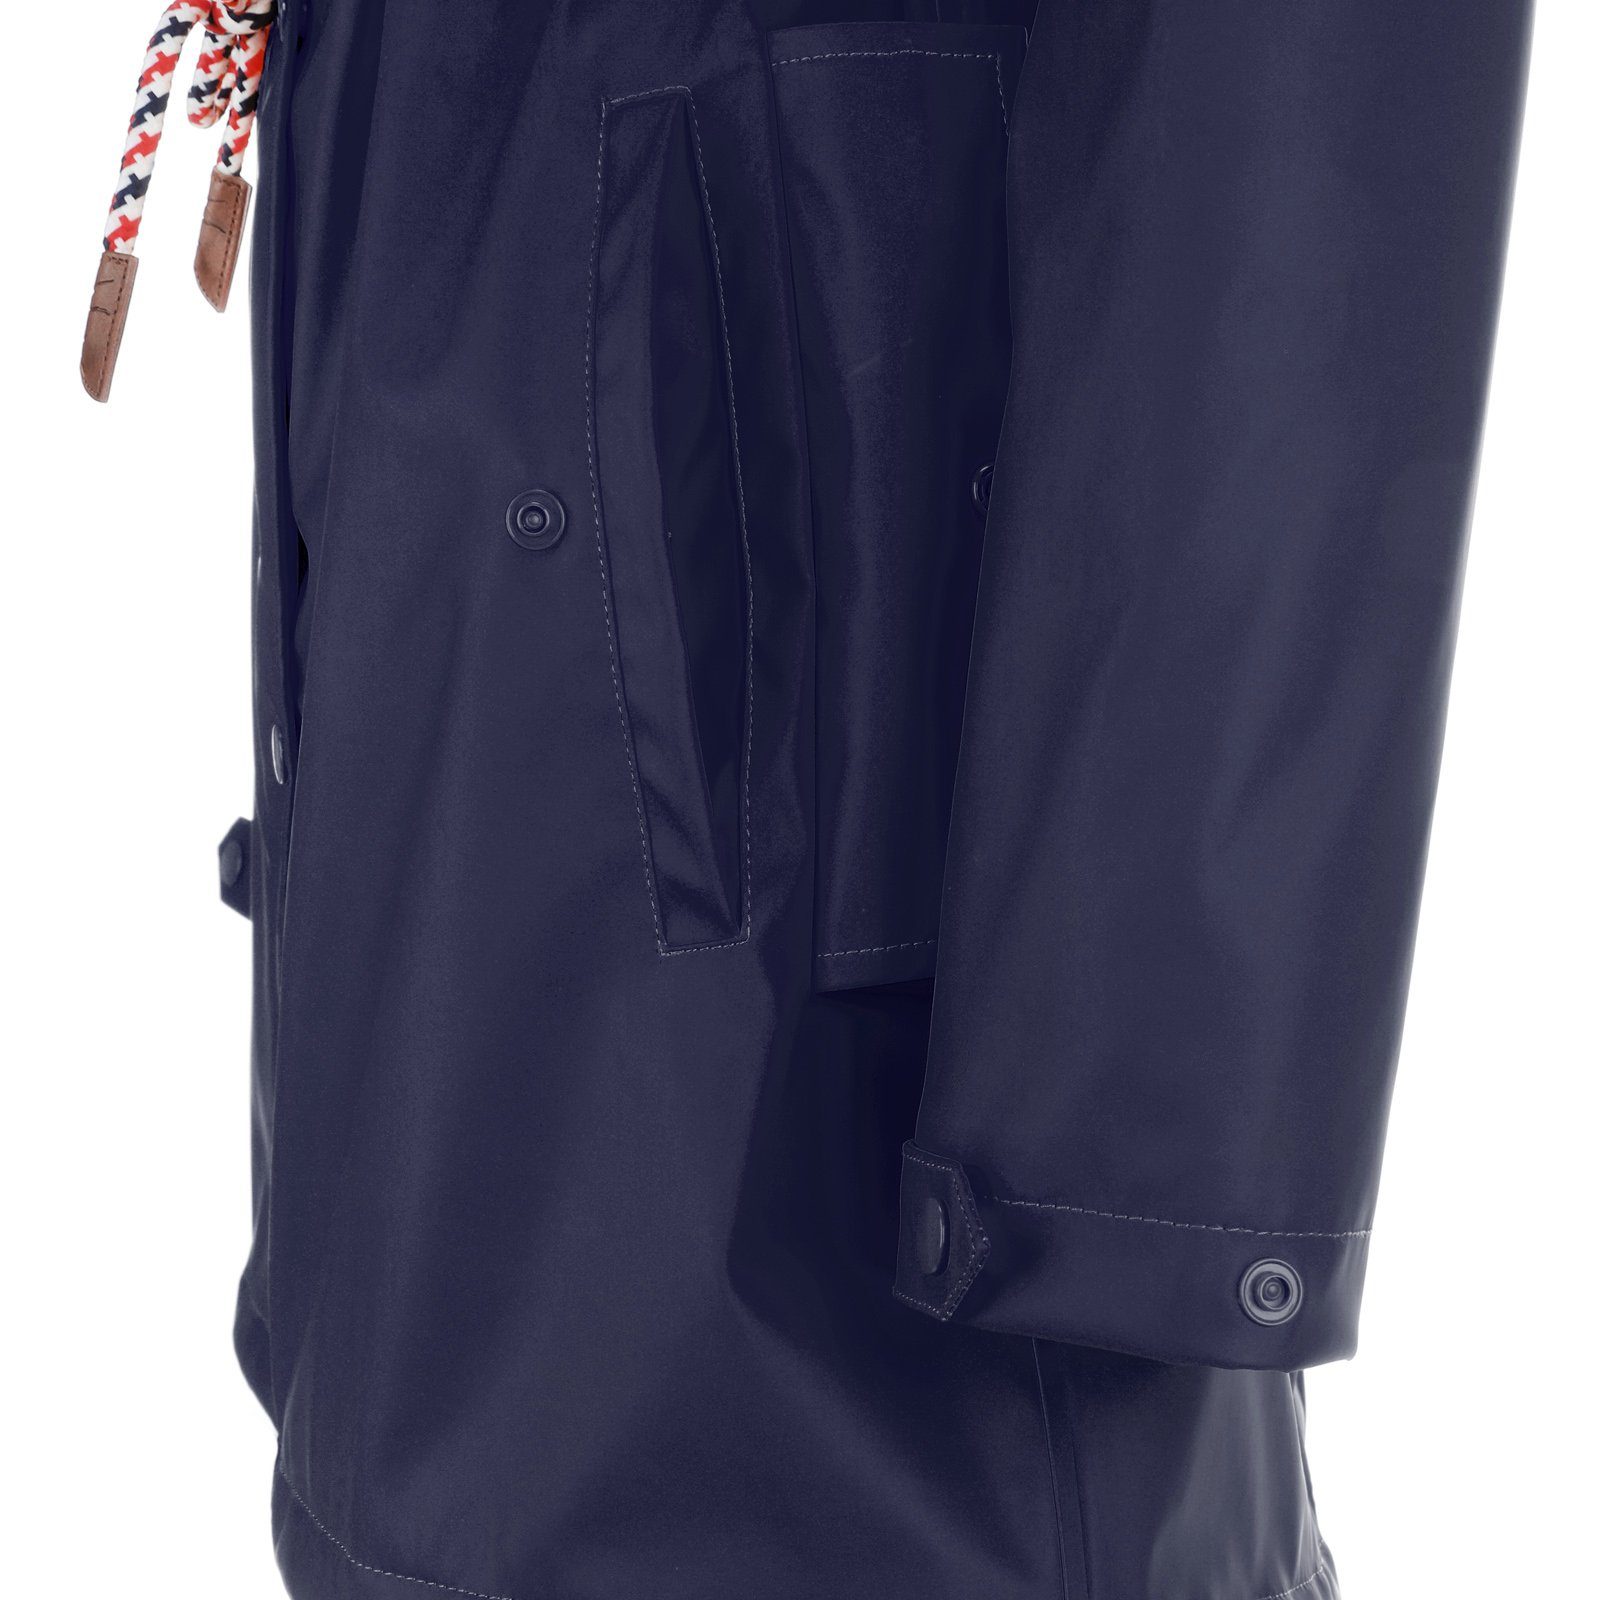 modAS Regenjacke Damen Regenmantel marine aus PU - Jacke Teddy-Fleece-Futter Wasserdichte mit